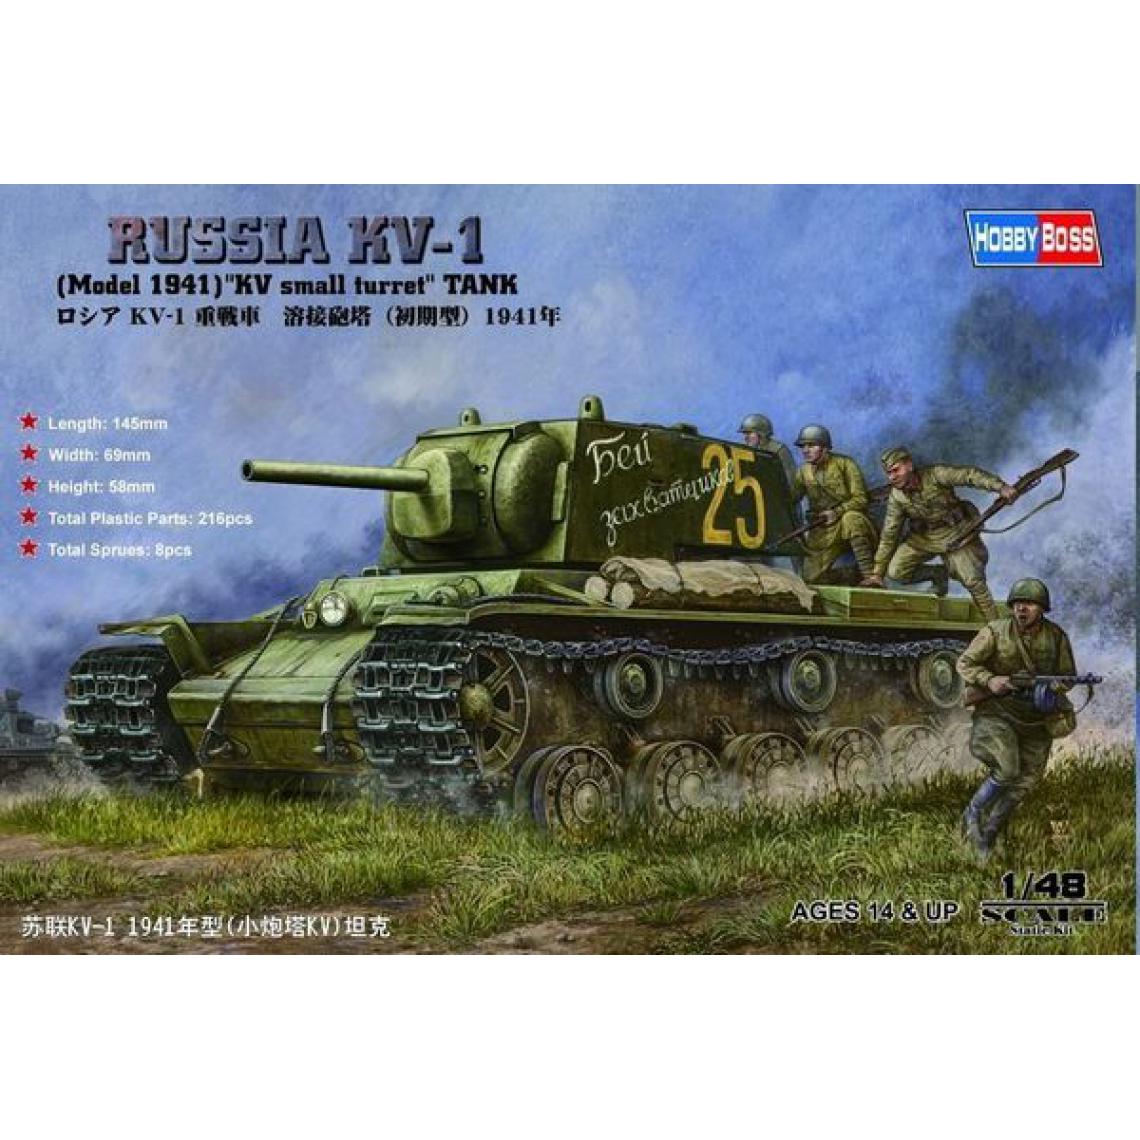 Hobby Boss - Russian KV-1 1941 Small Turret tank - 1:48e - Hobby Boss - Accessoires et pièces